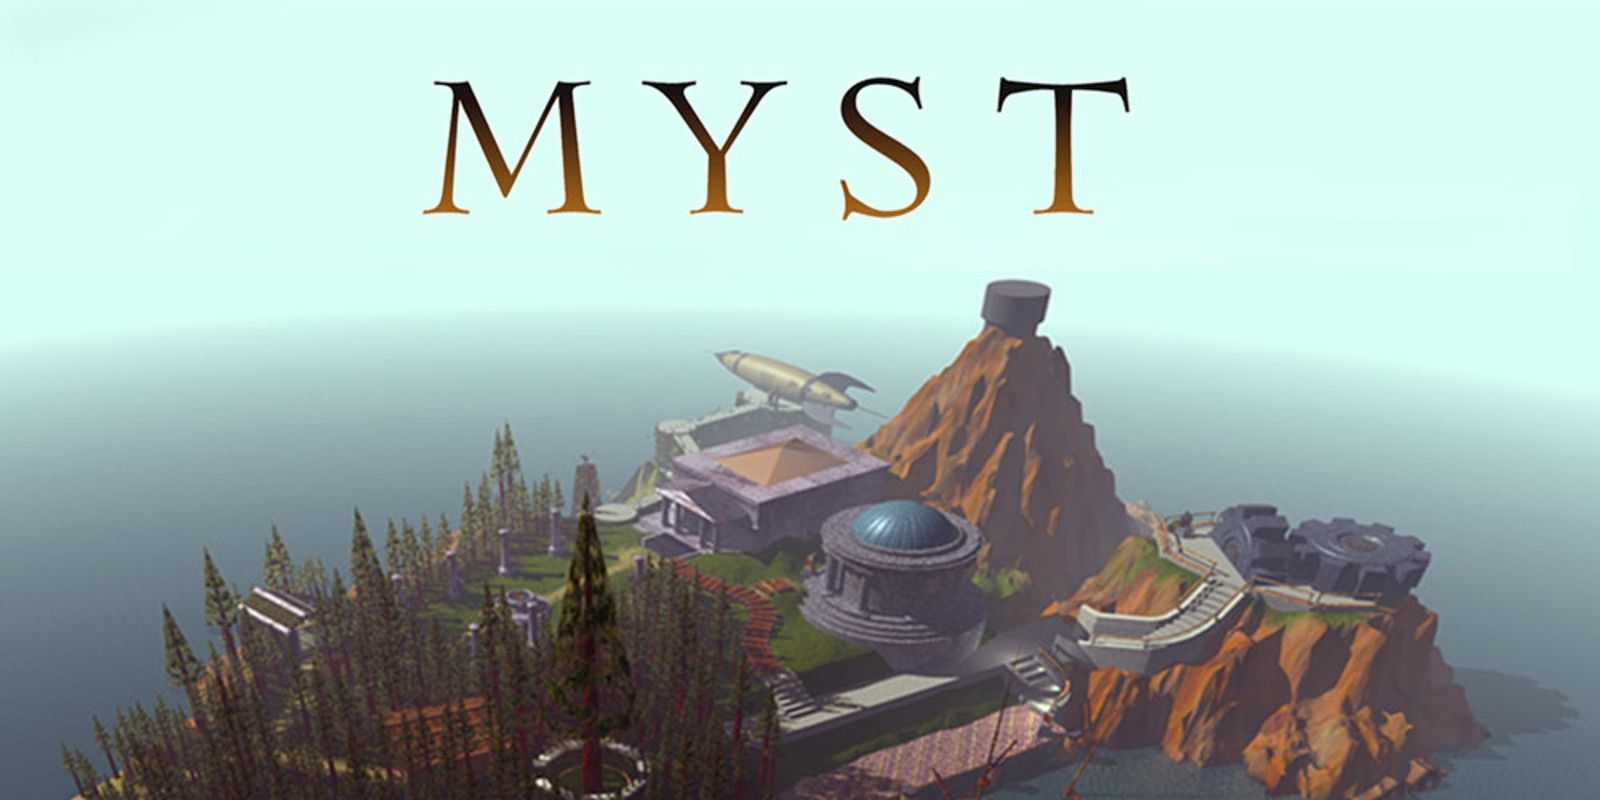 myst video game book series